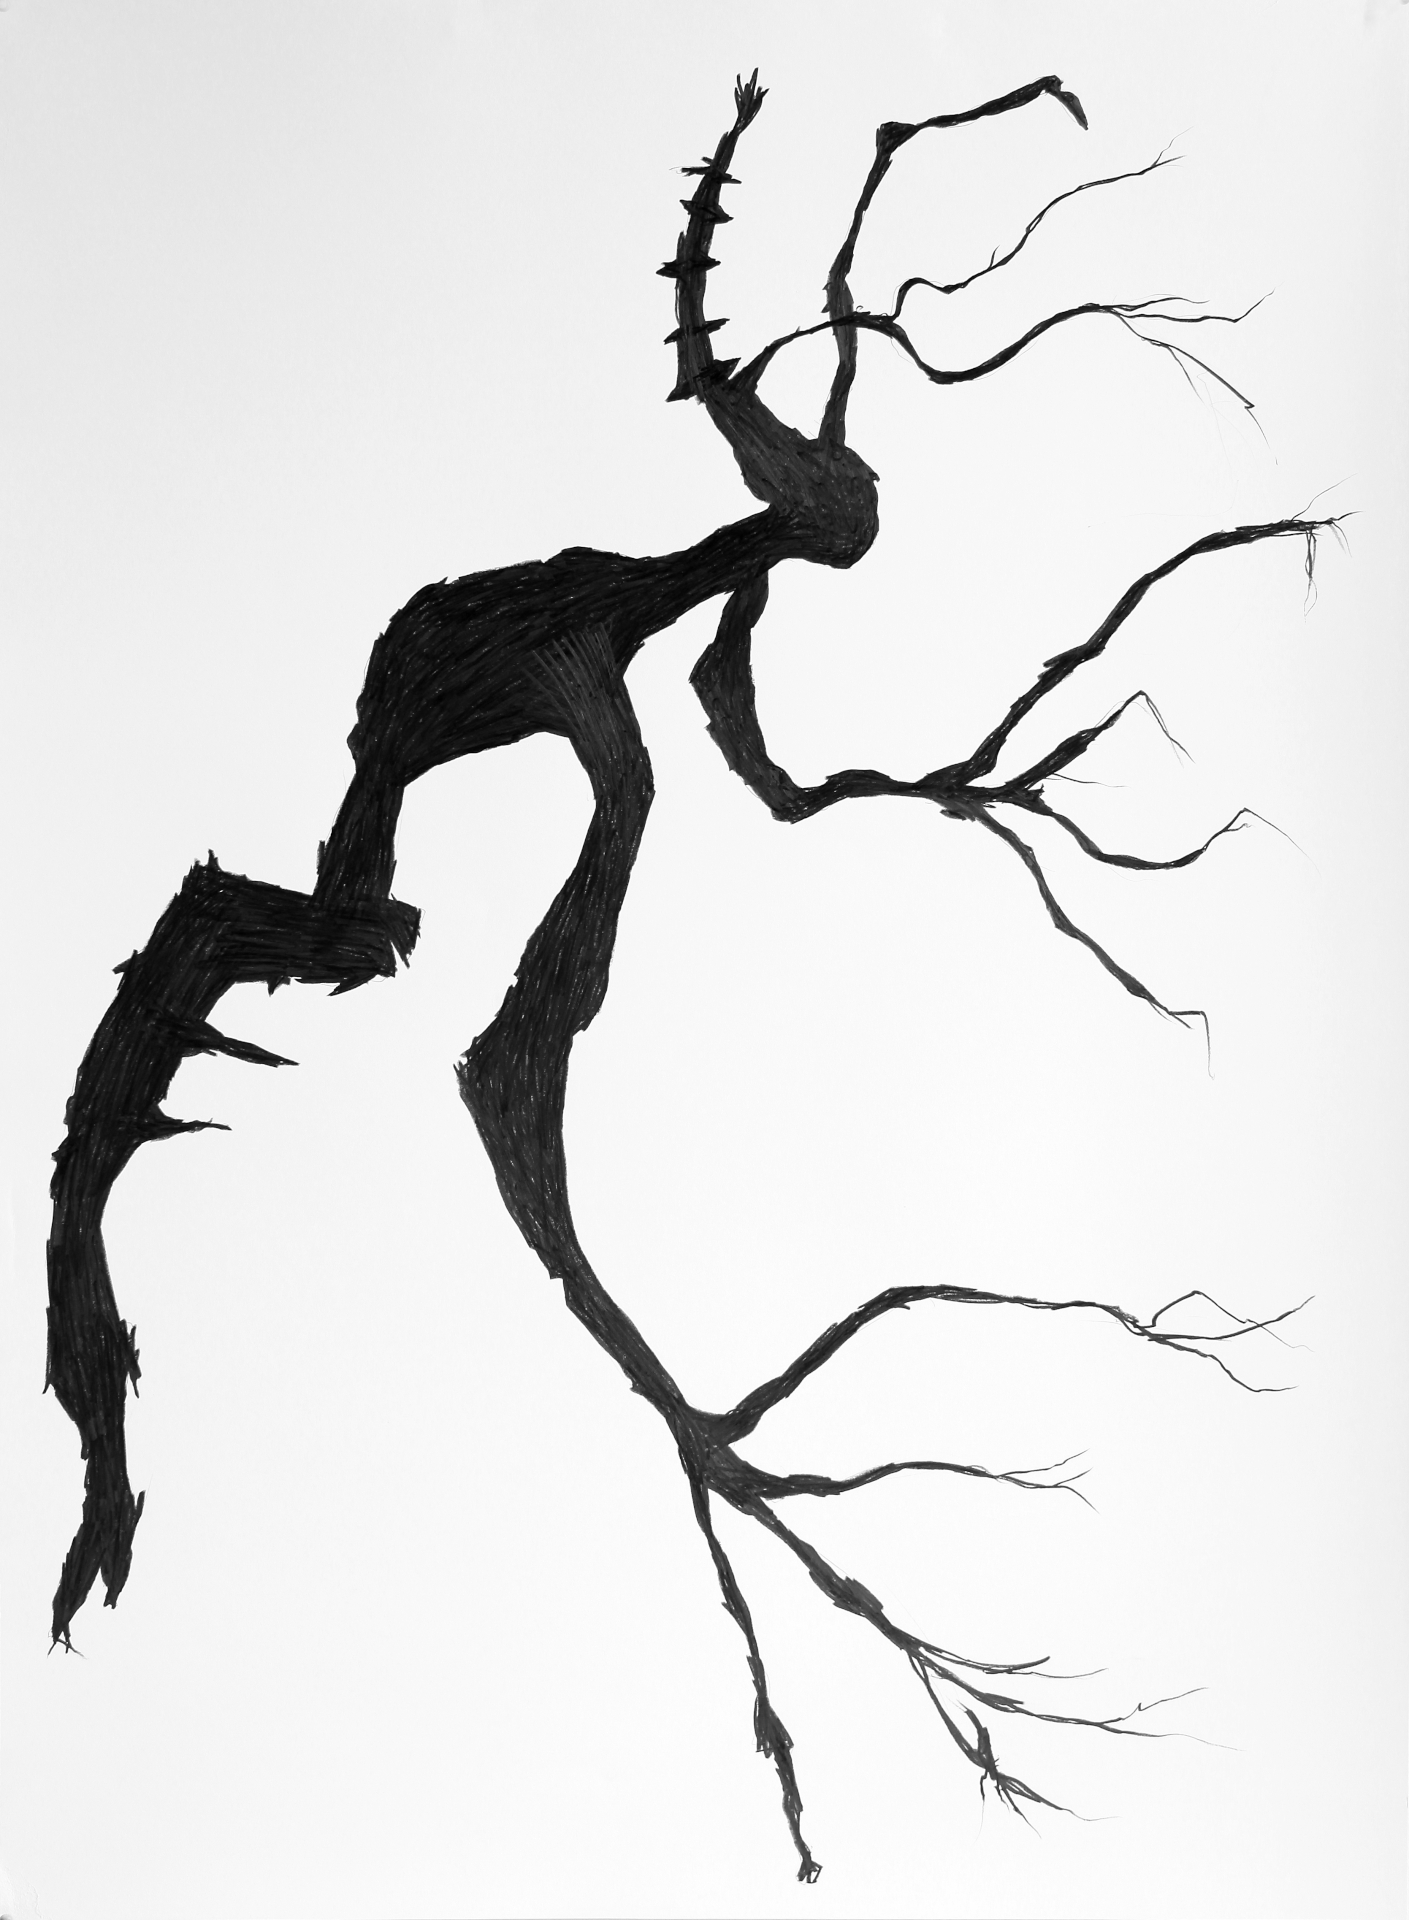 Black and white print of tree-like creature